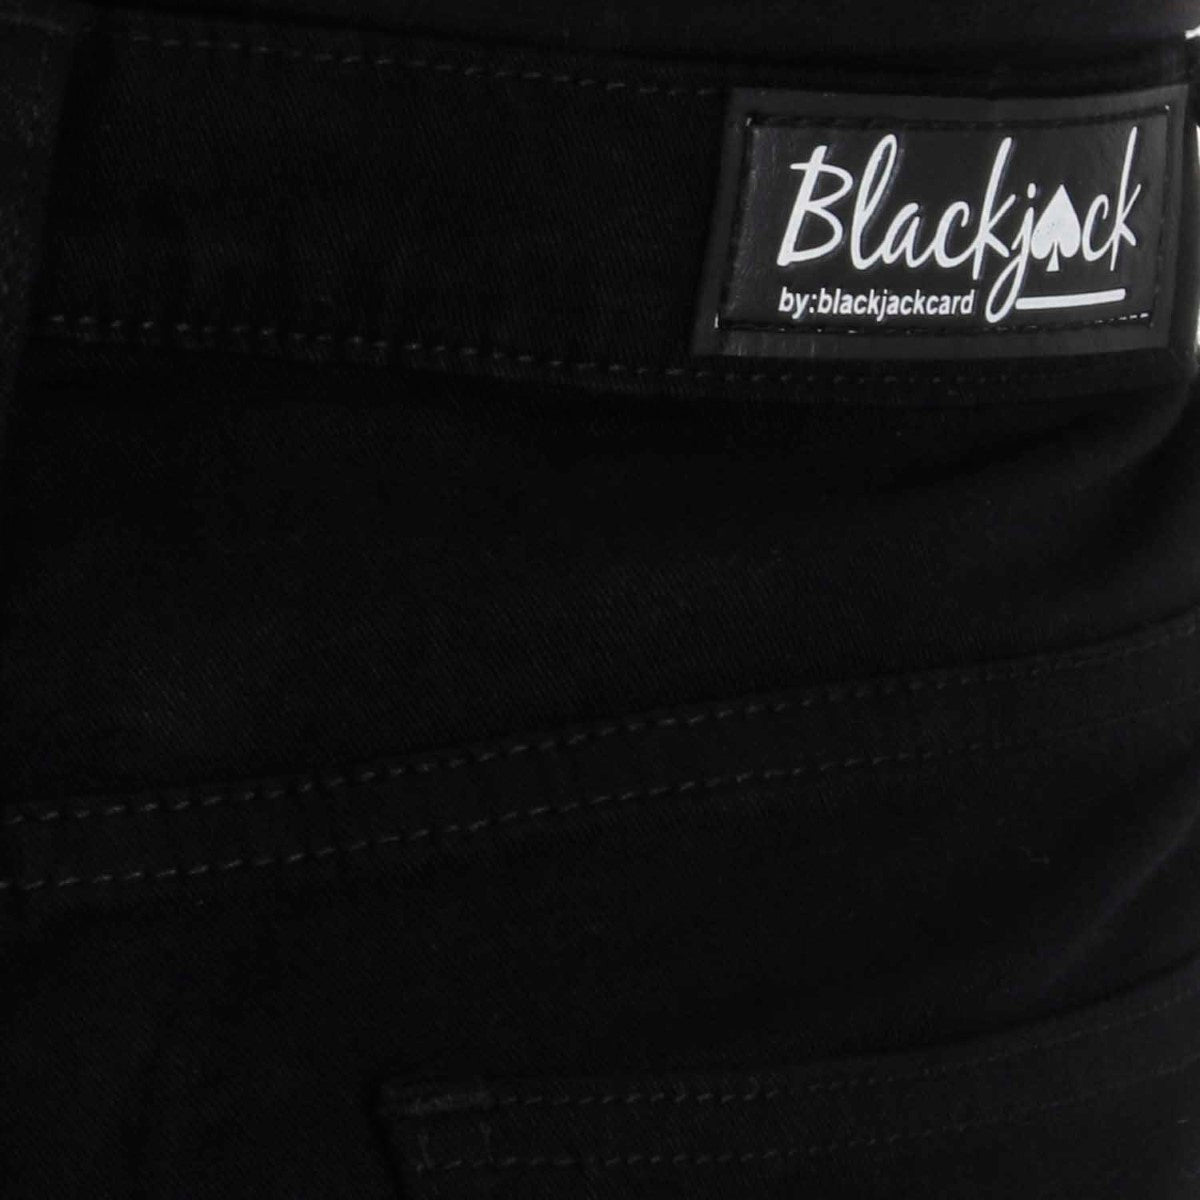 Black High Rise Premium Stretchable Jeans